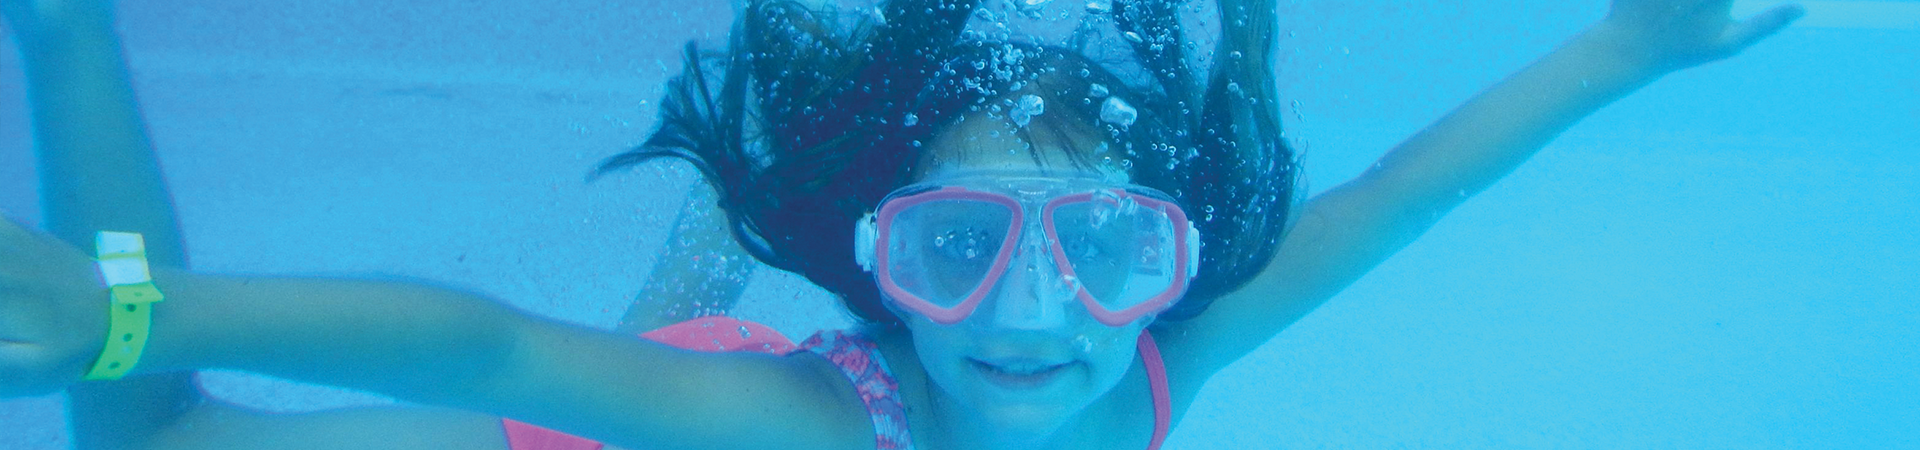  girl underwater wearing pink goggles 